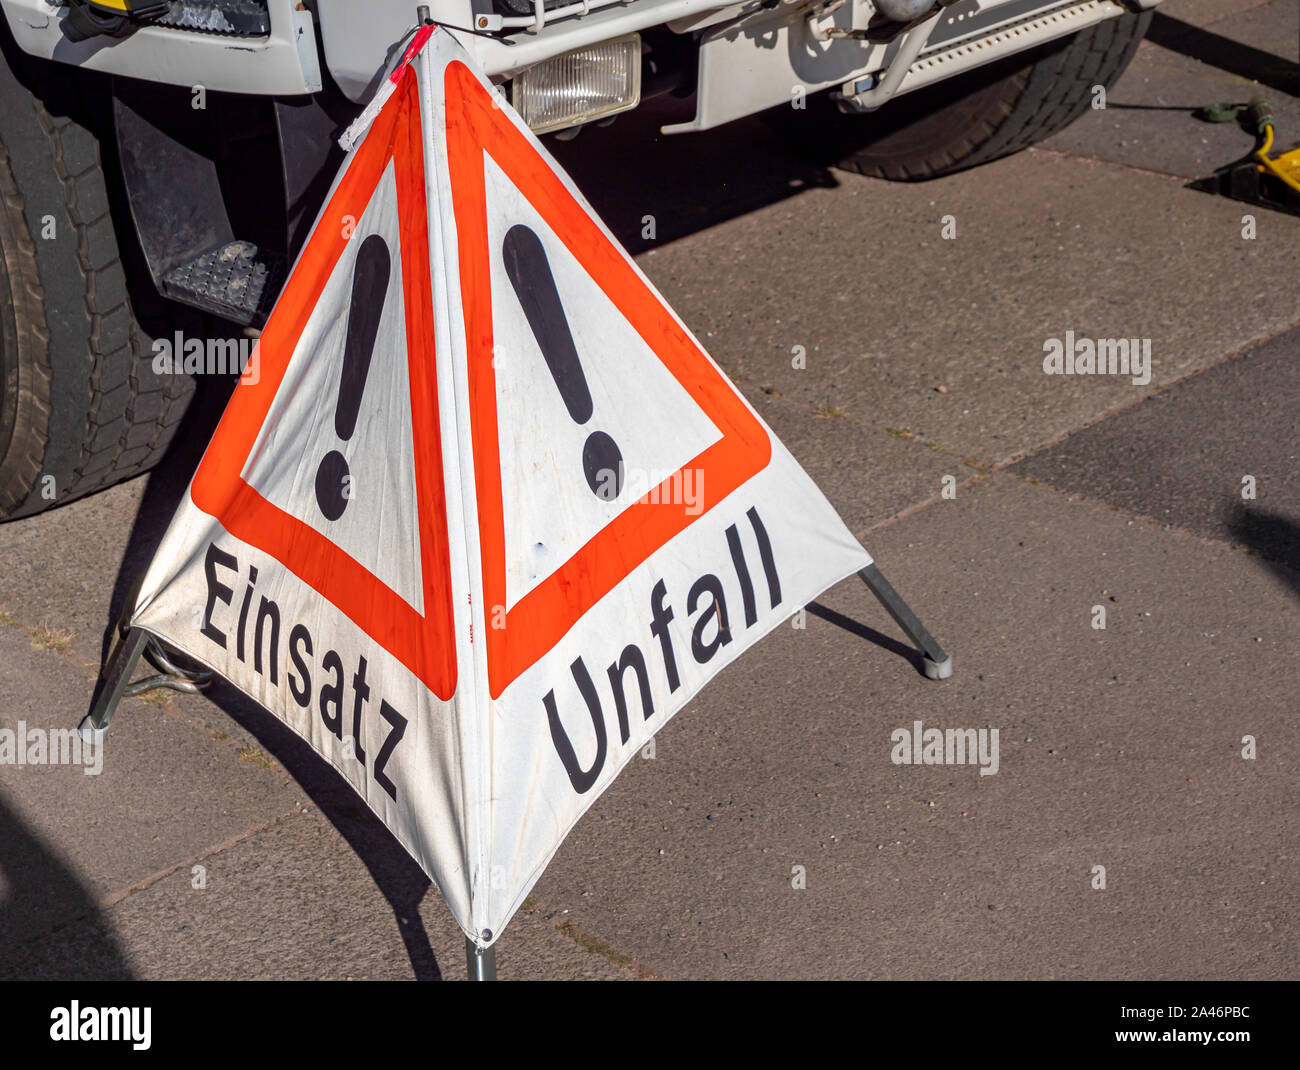 Warndreieck Safety Triangle Road Hazard Vtg Made in Germany Automobile